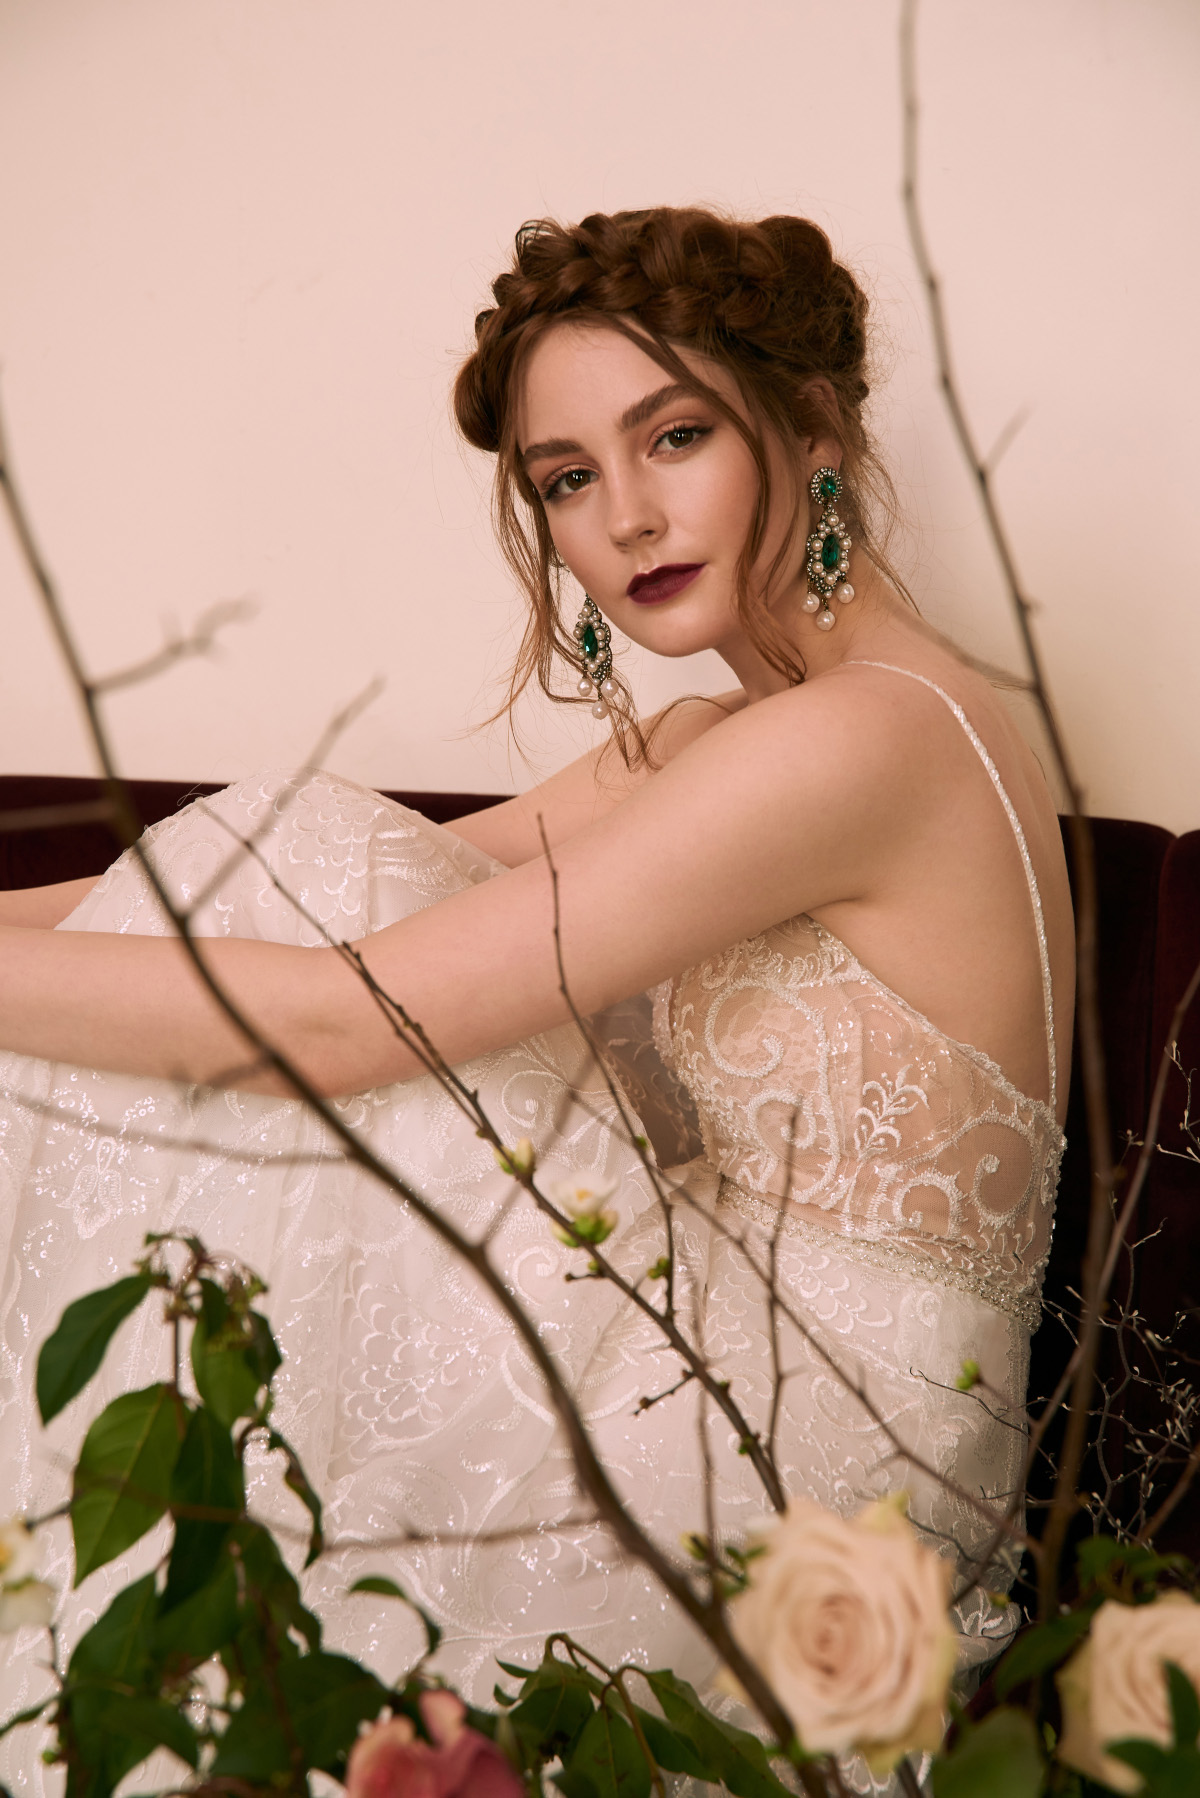 A girl sitting by wearing a beautiful wedding dress